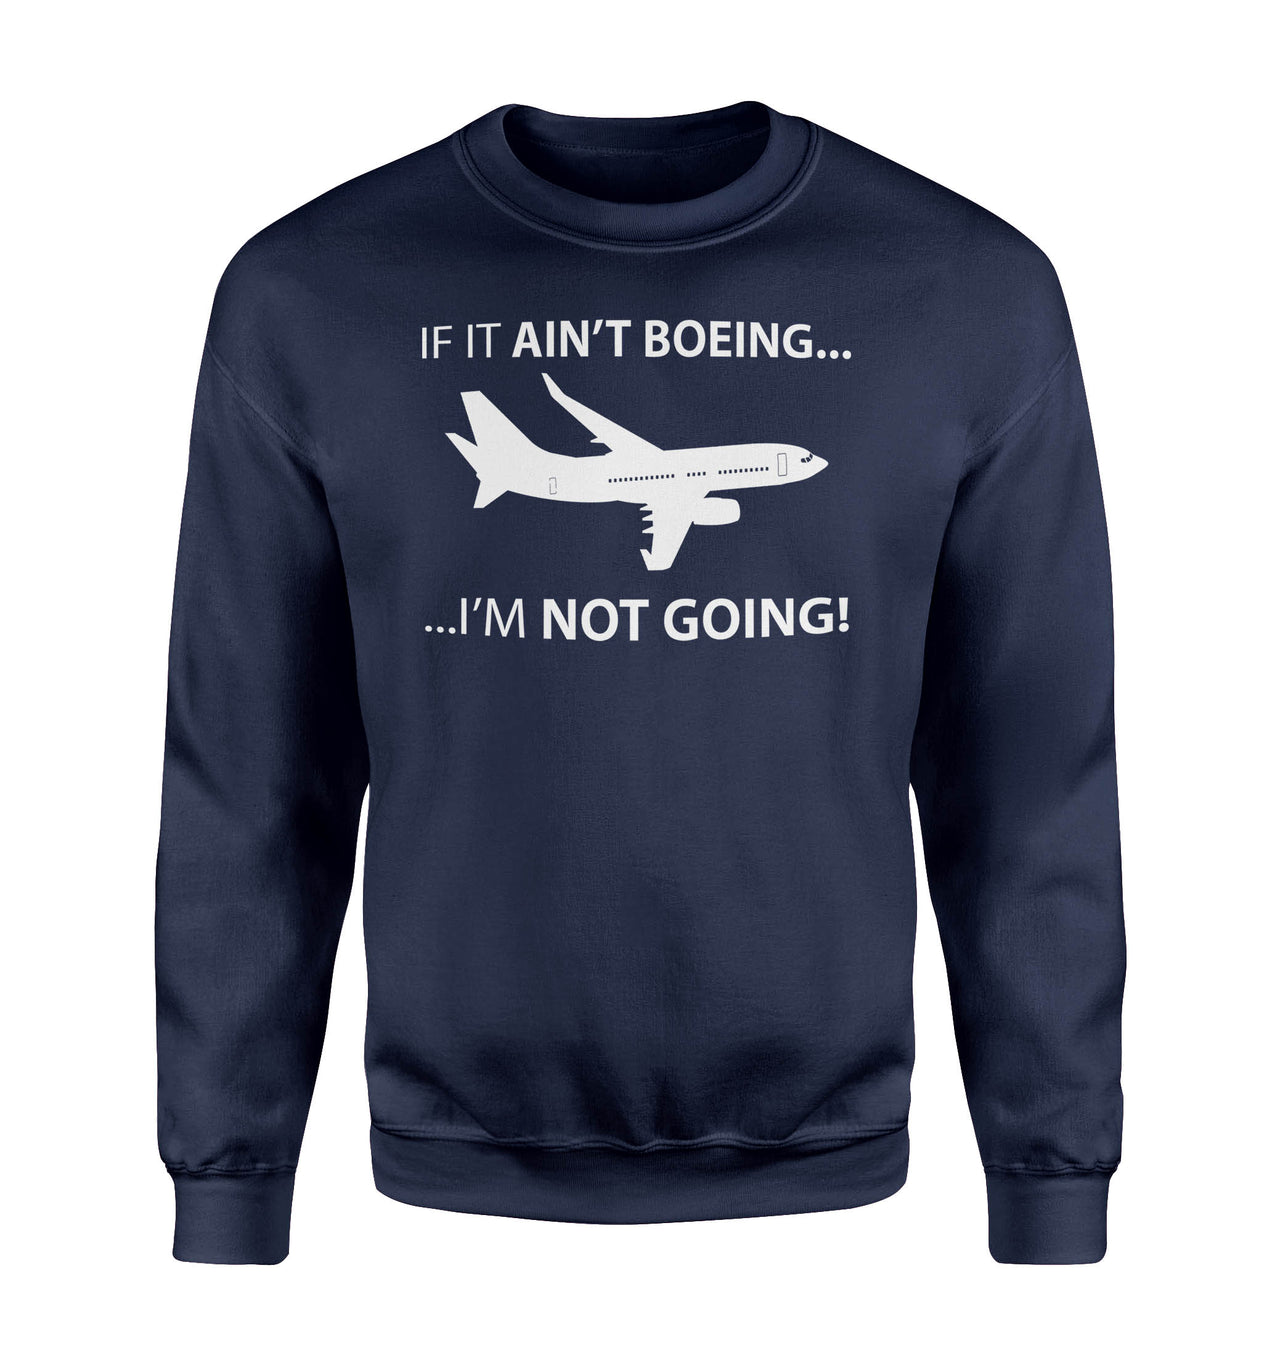 If It Ain't Boeing I'm Not Going! Designed Sweatshirts